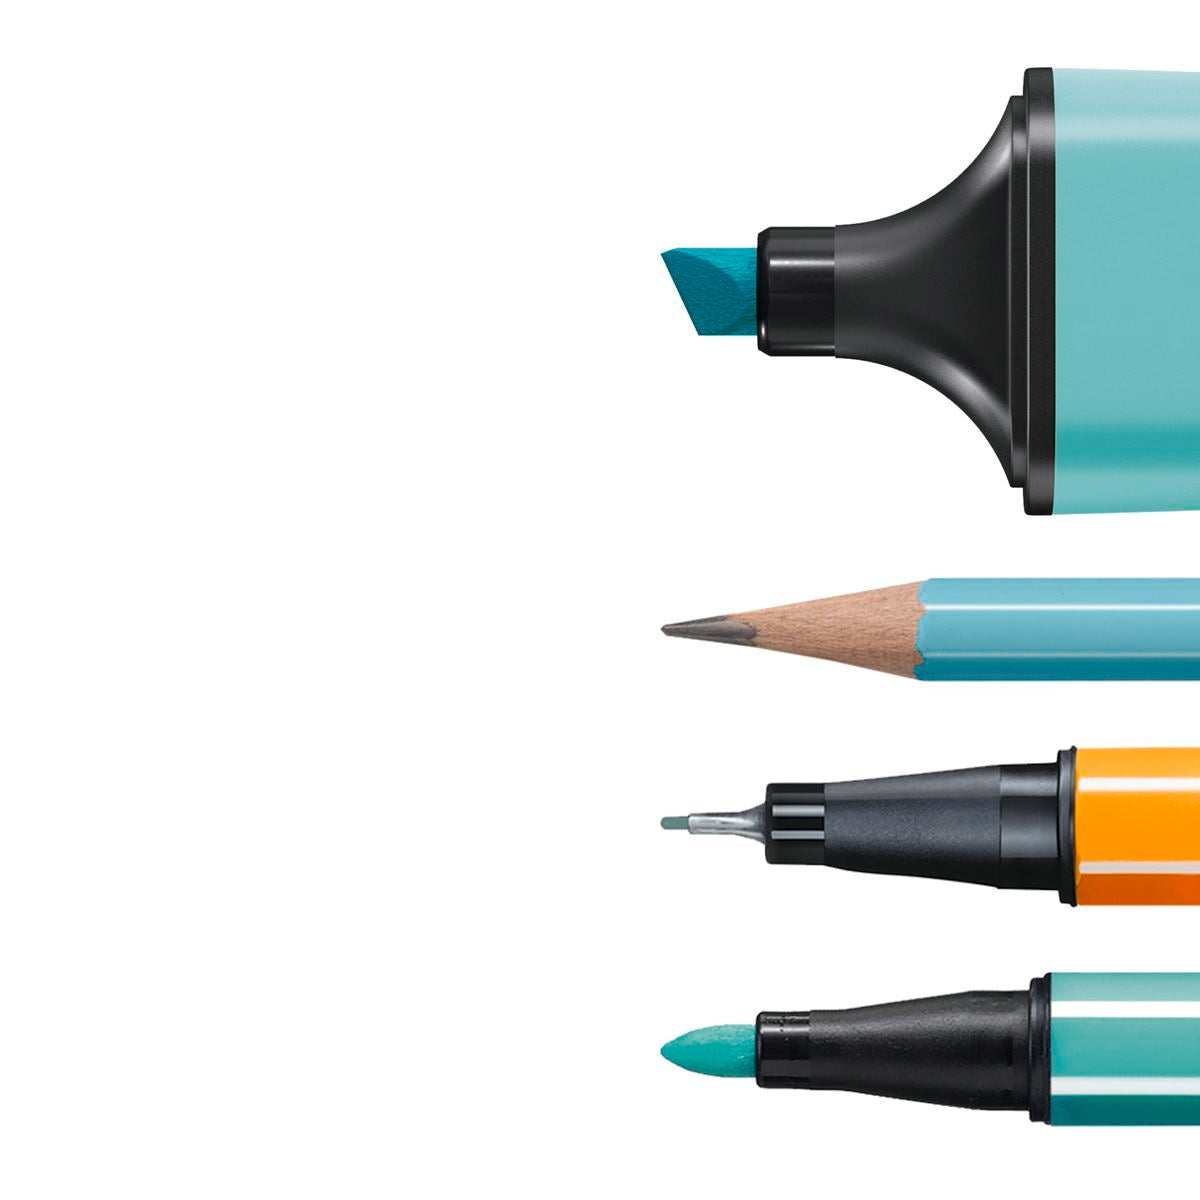 STABILO Pastel Set - STABILO Pen 68 Mini, Point 88 Mini, Boss Mini Pastellove & Swano Pastel Pencils - Pack of 35